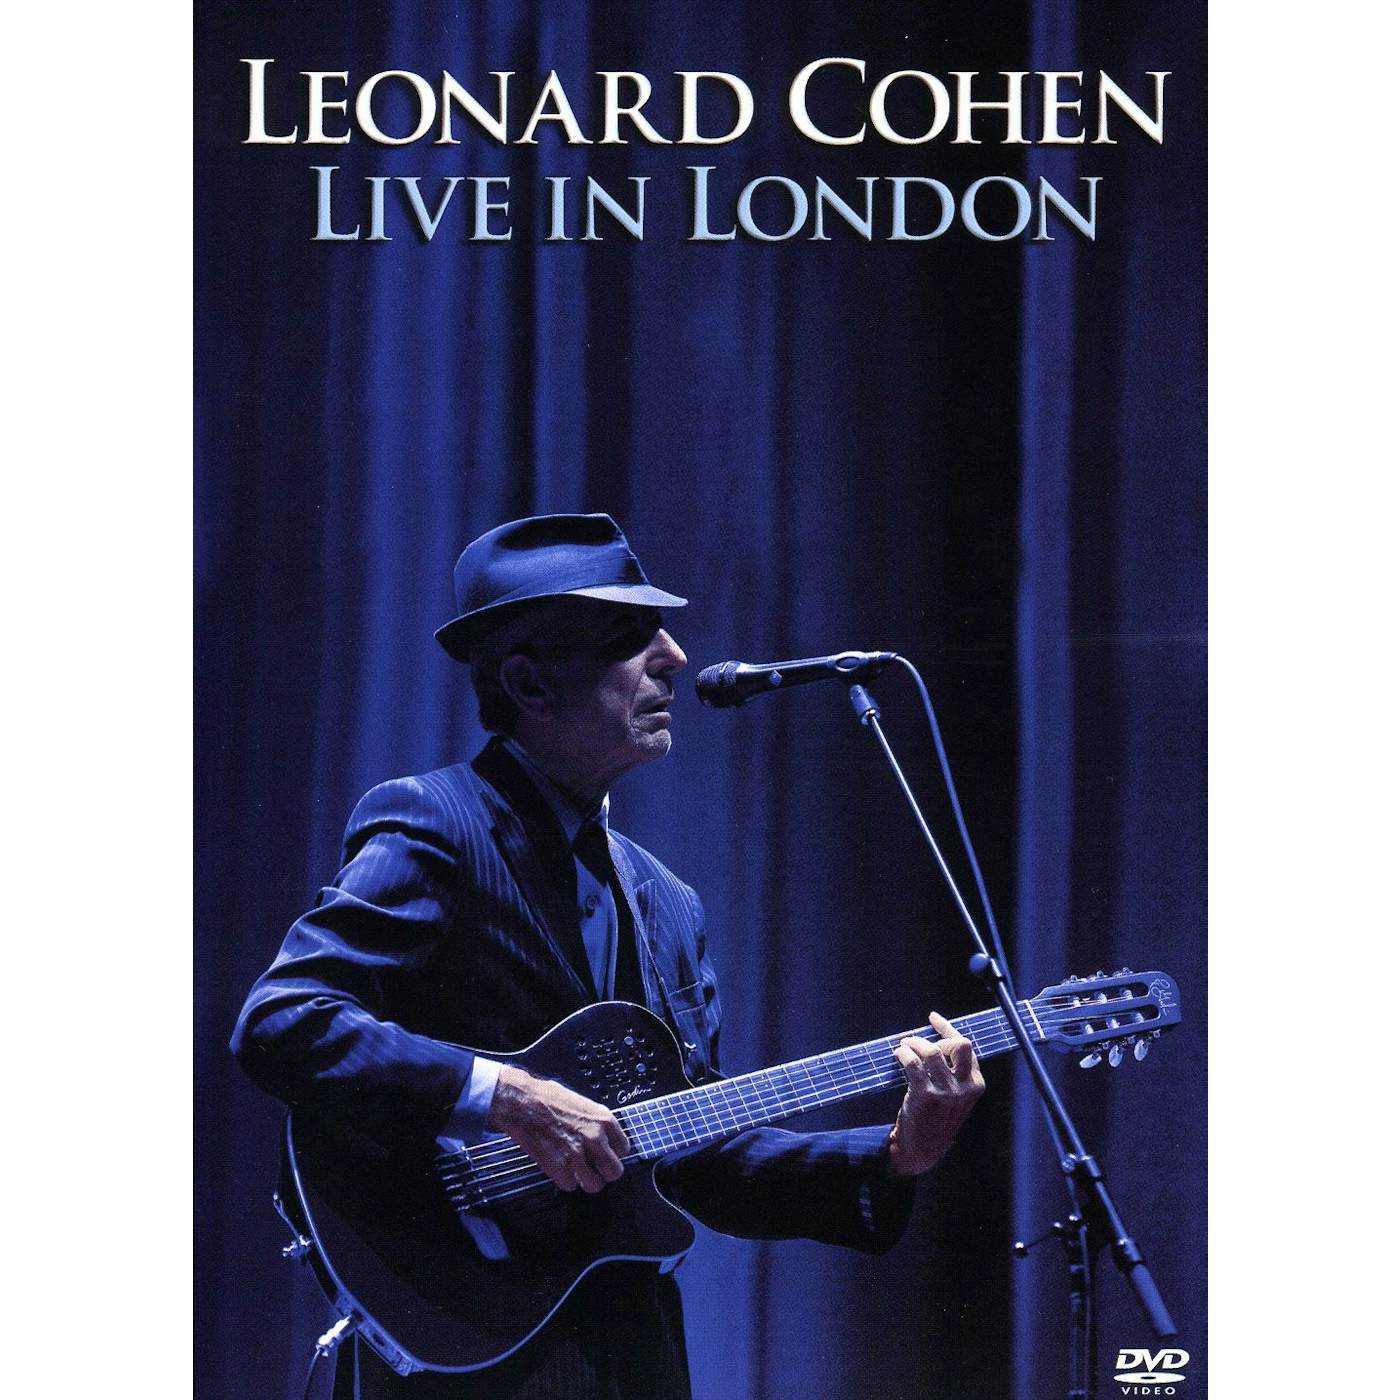 Leonard Cohen LIVE IN LONDON DVD